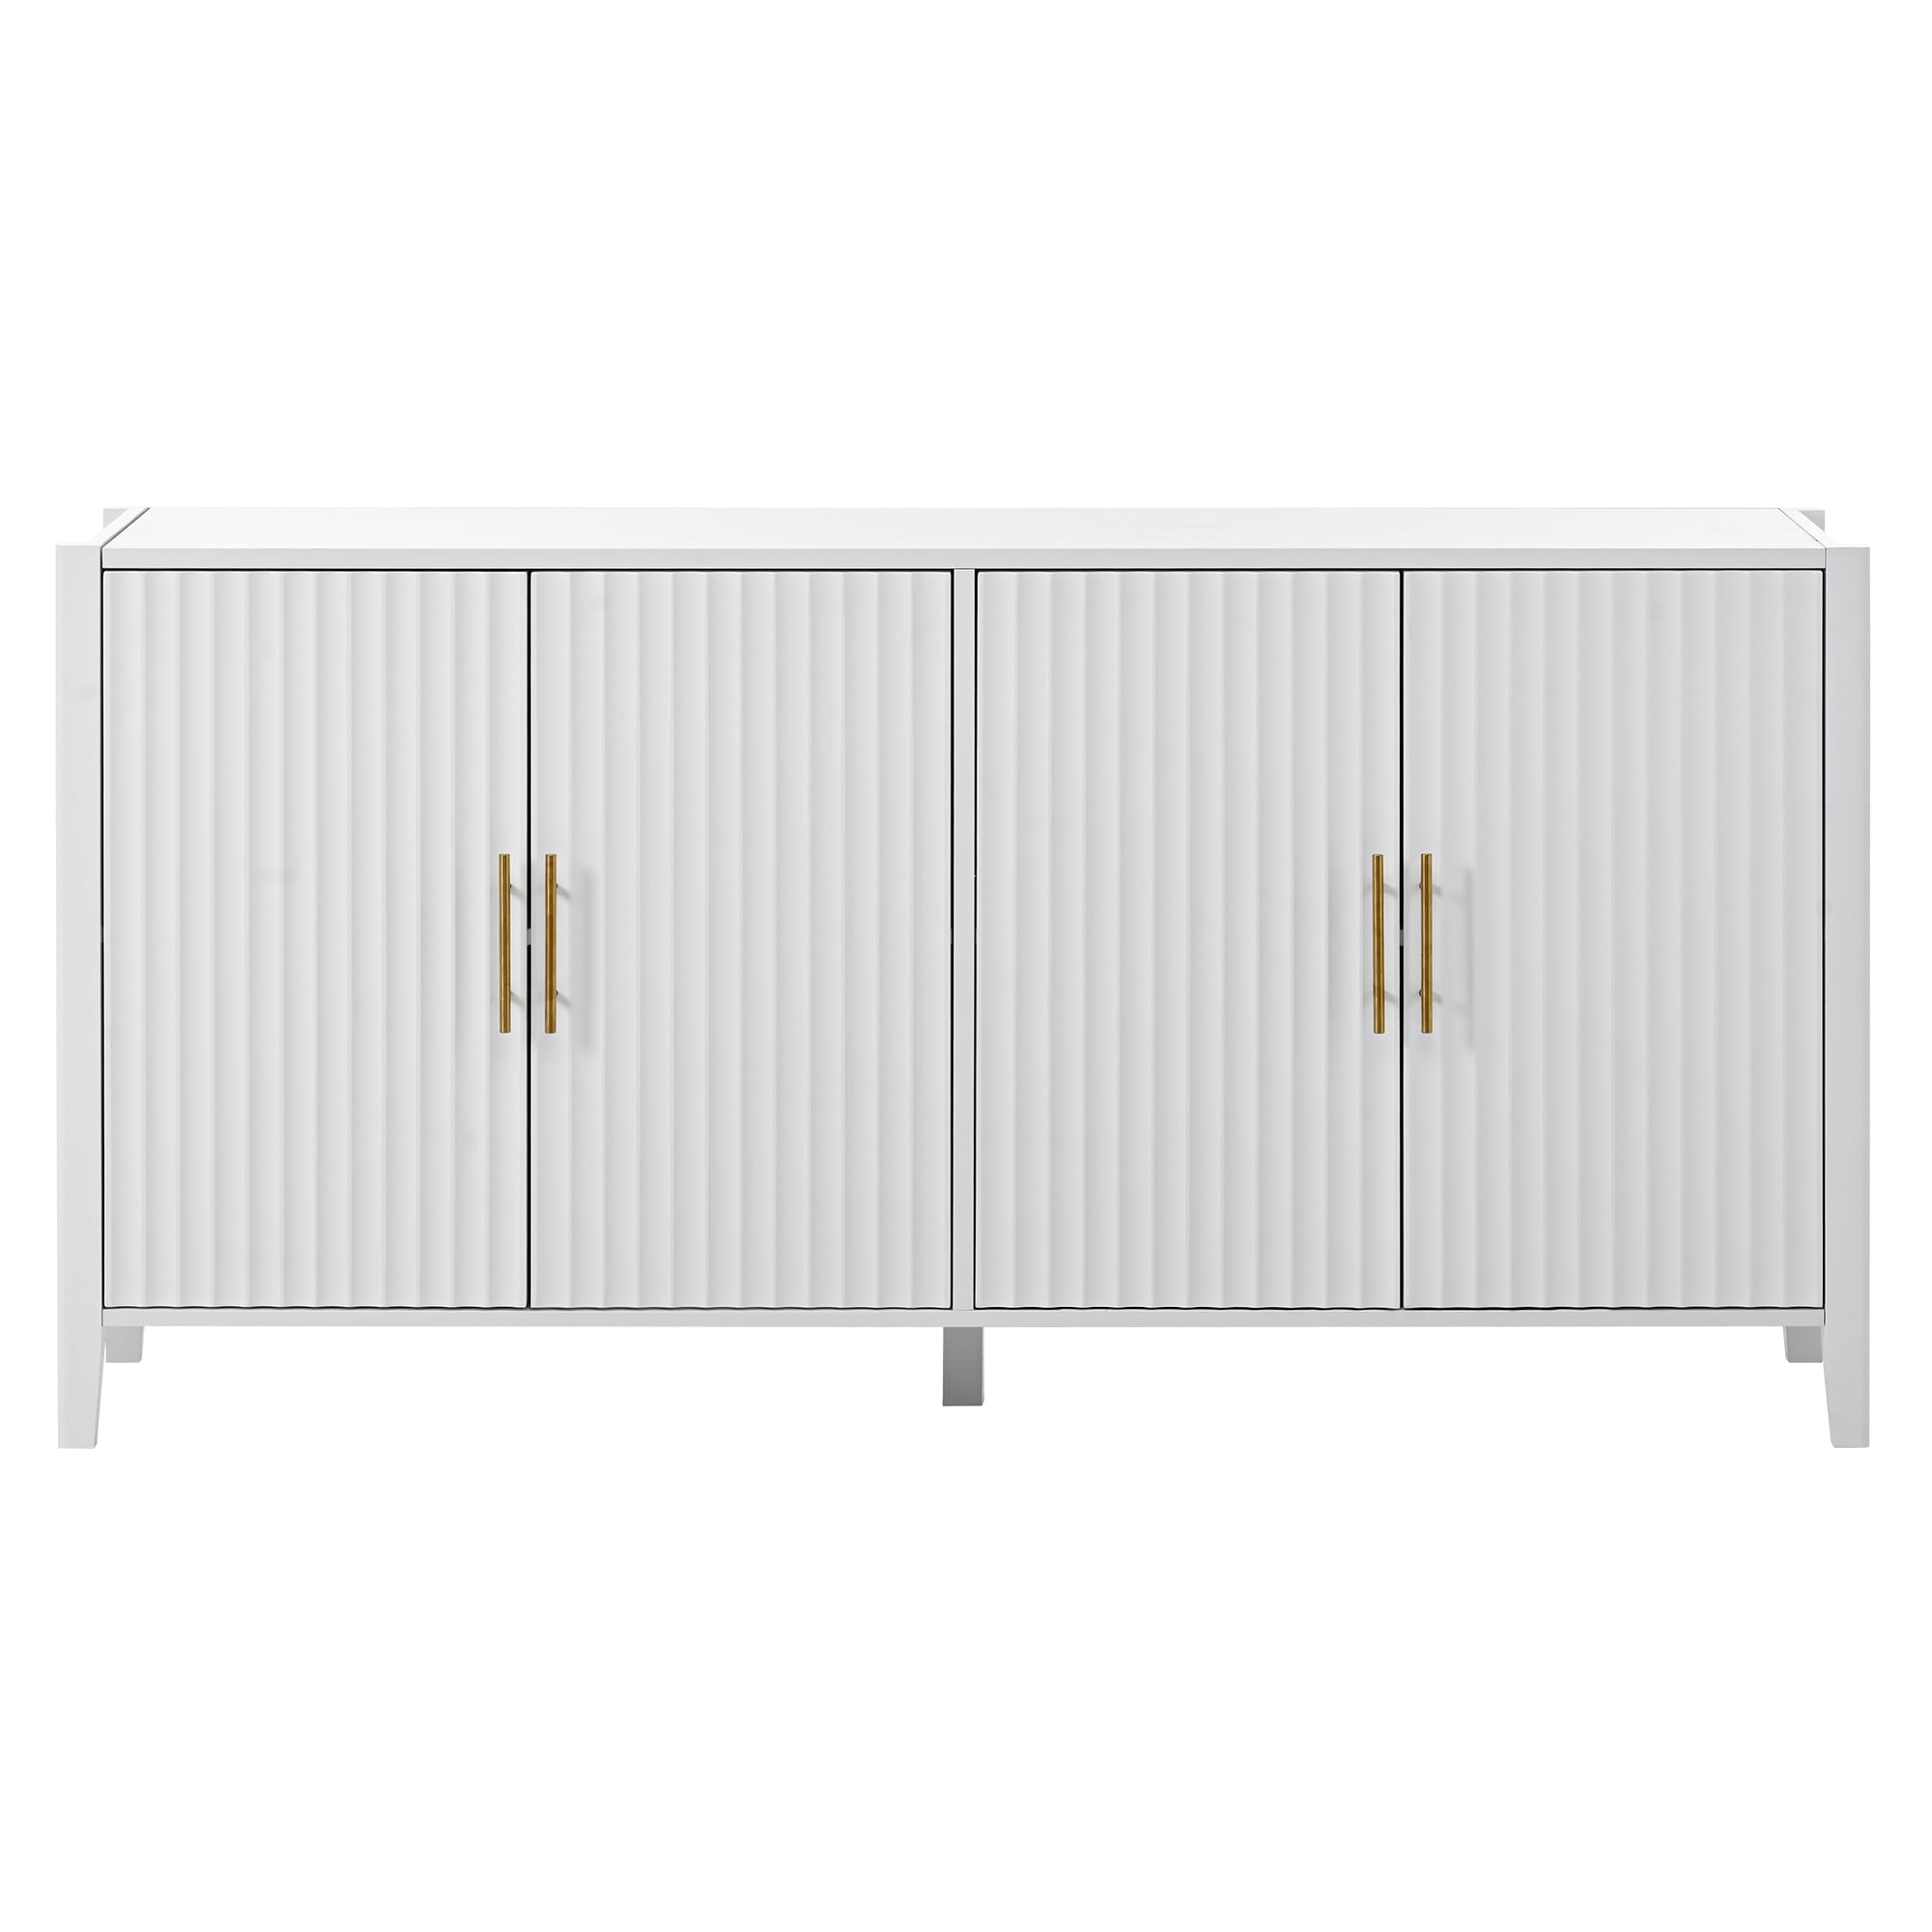 Wooden Storage Cabinet With Metal Handles - WF300428AAK